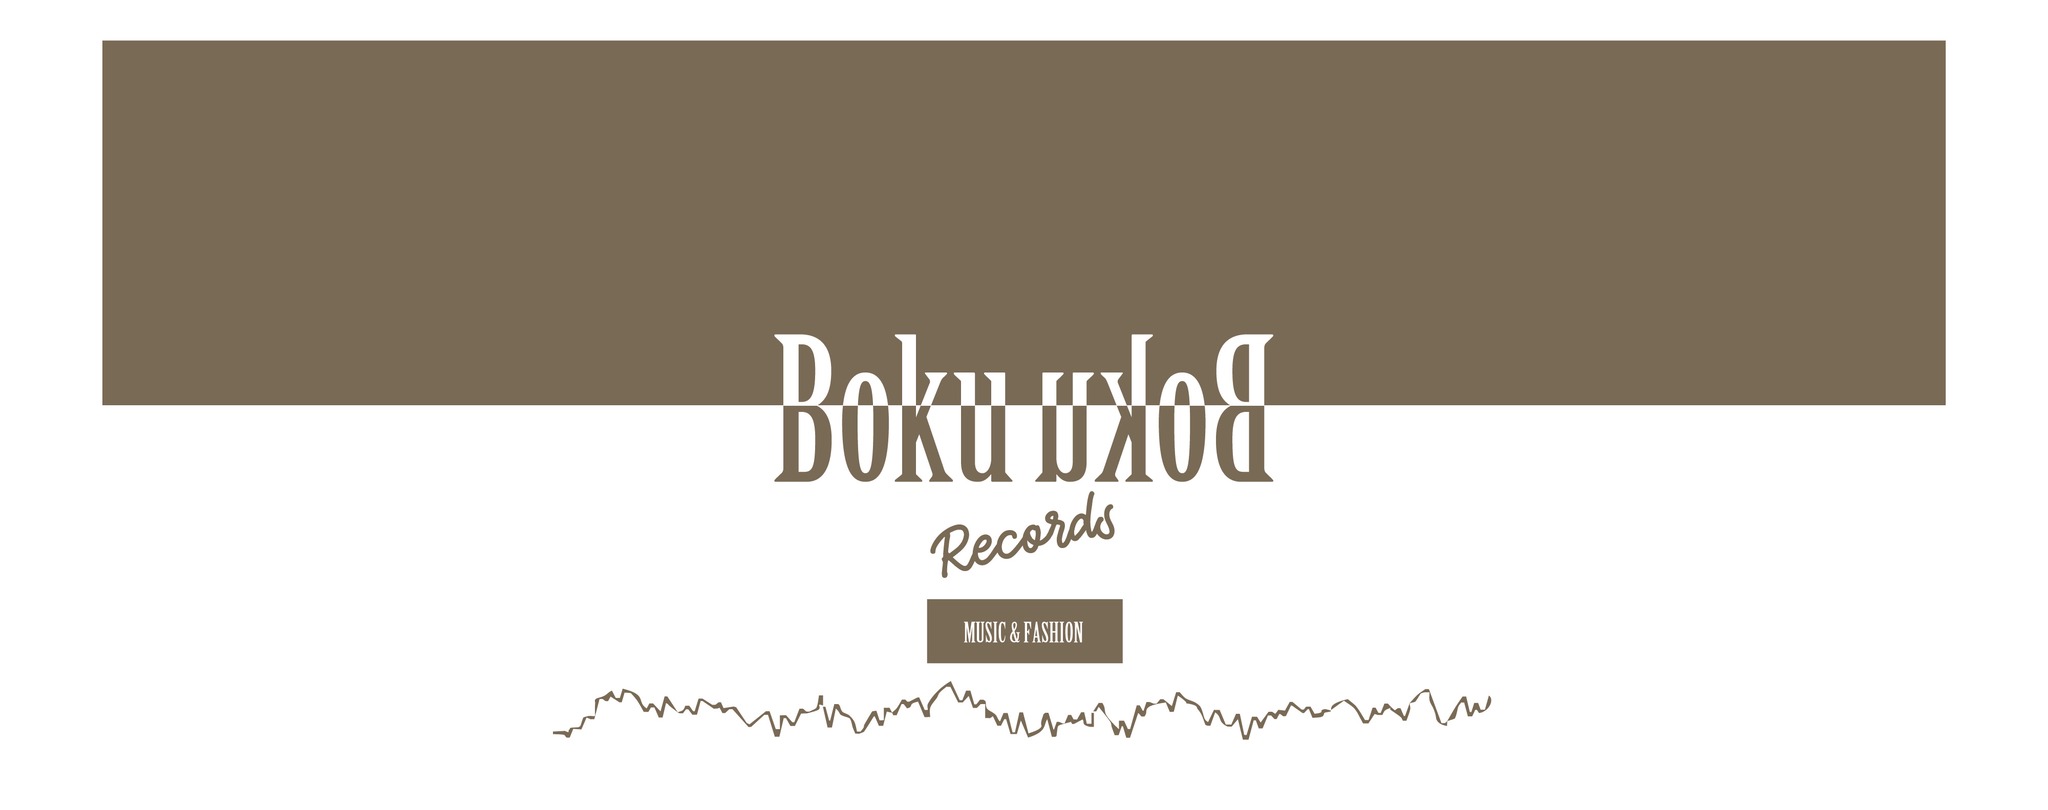 Boku Boku Records.